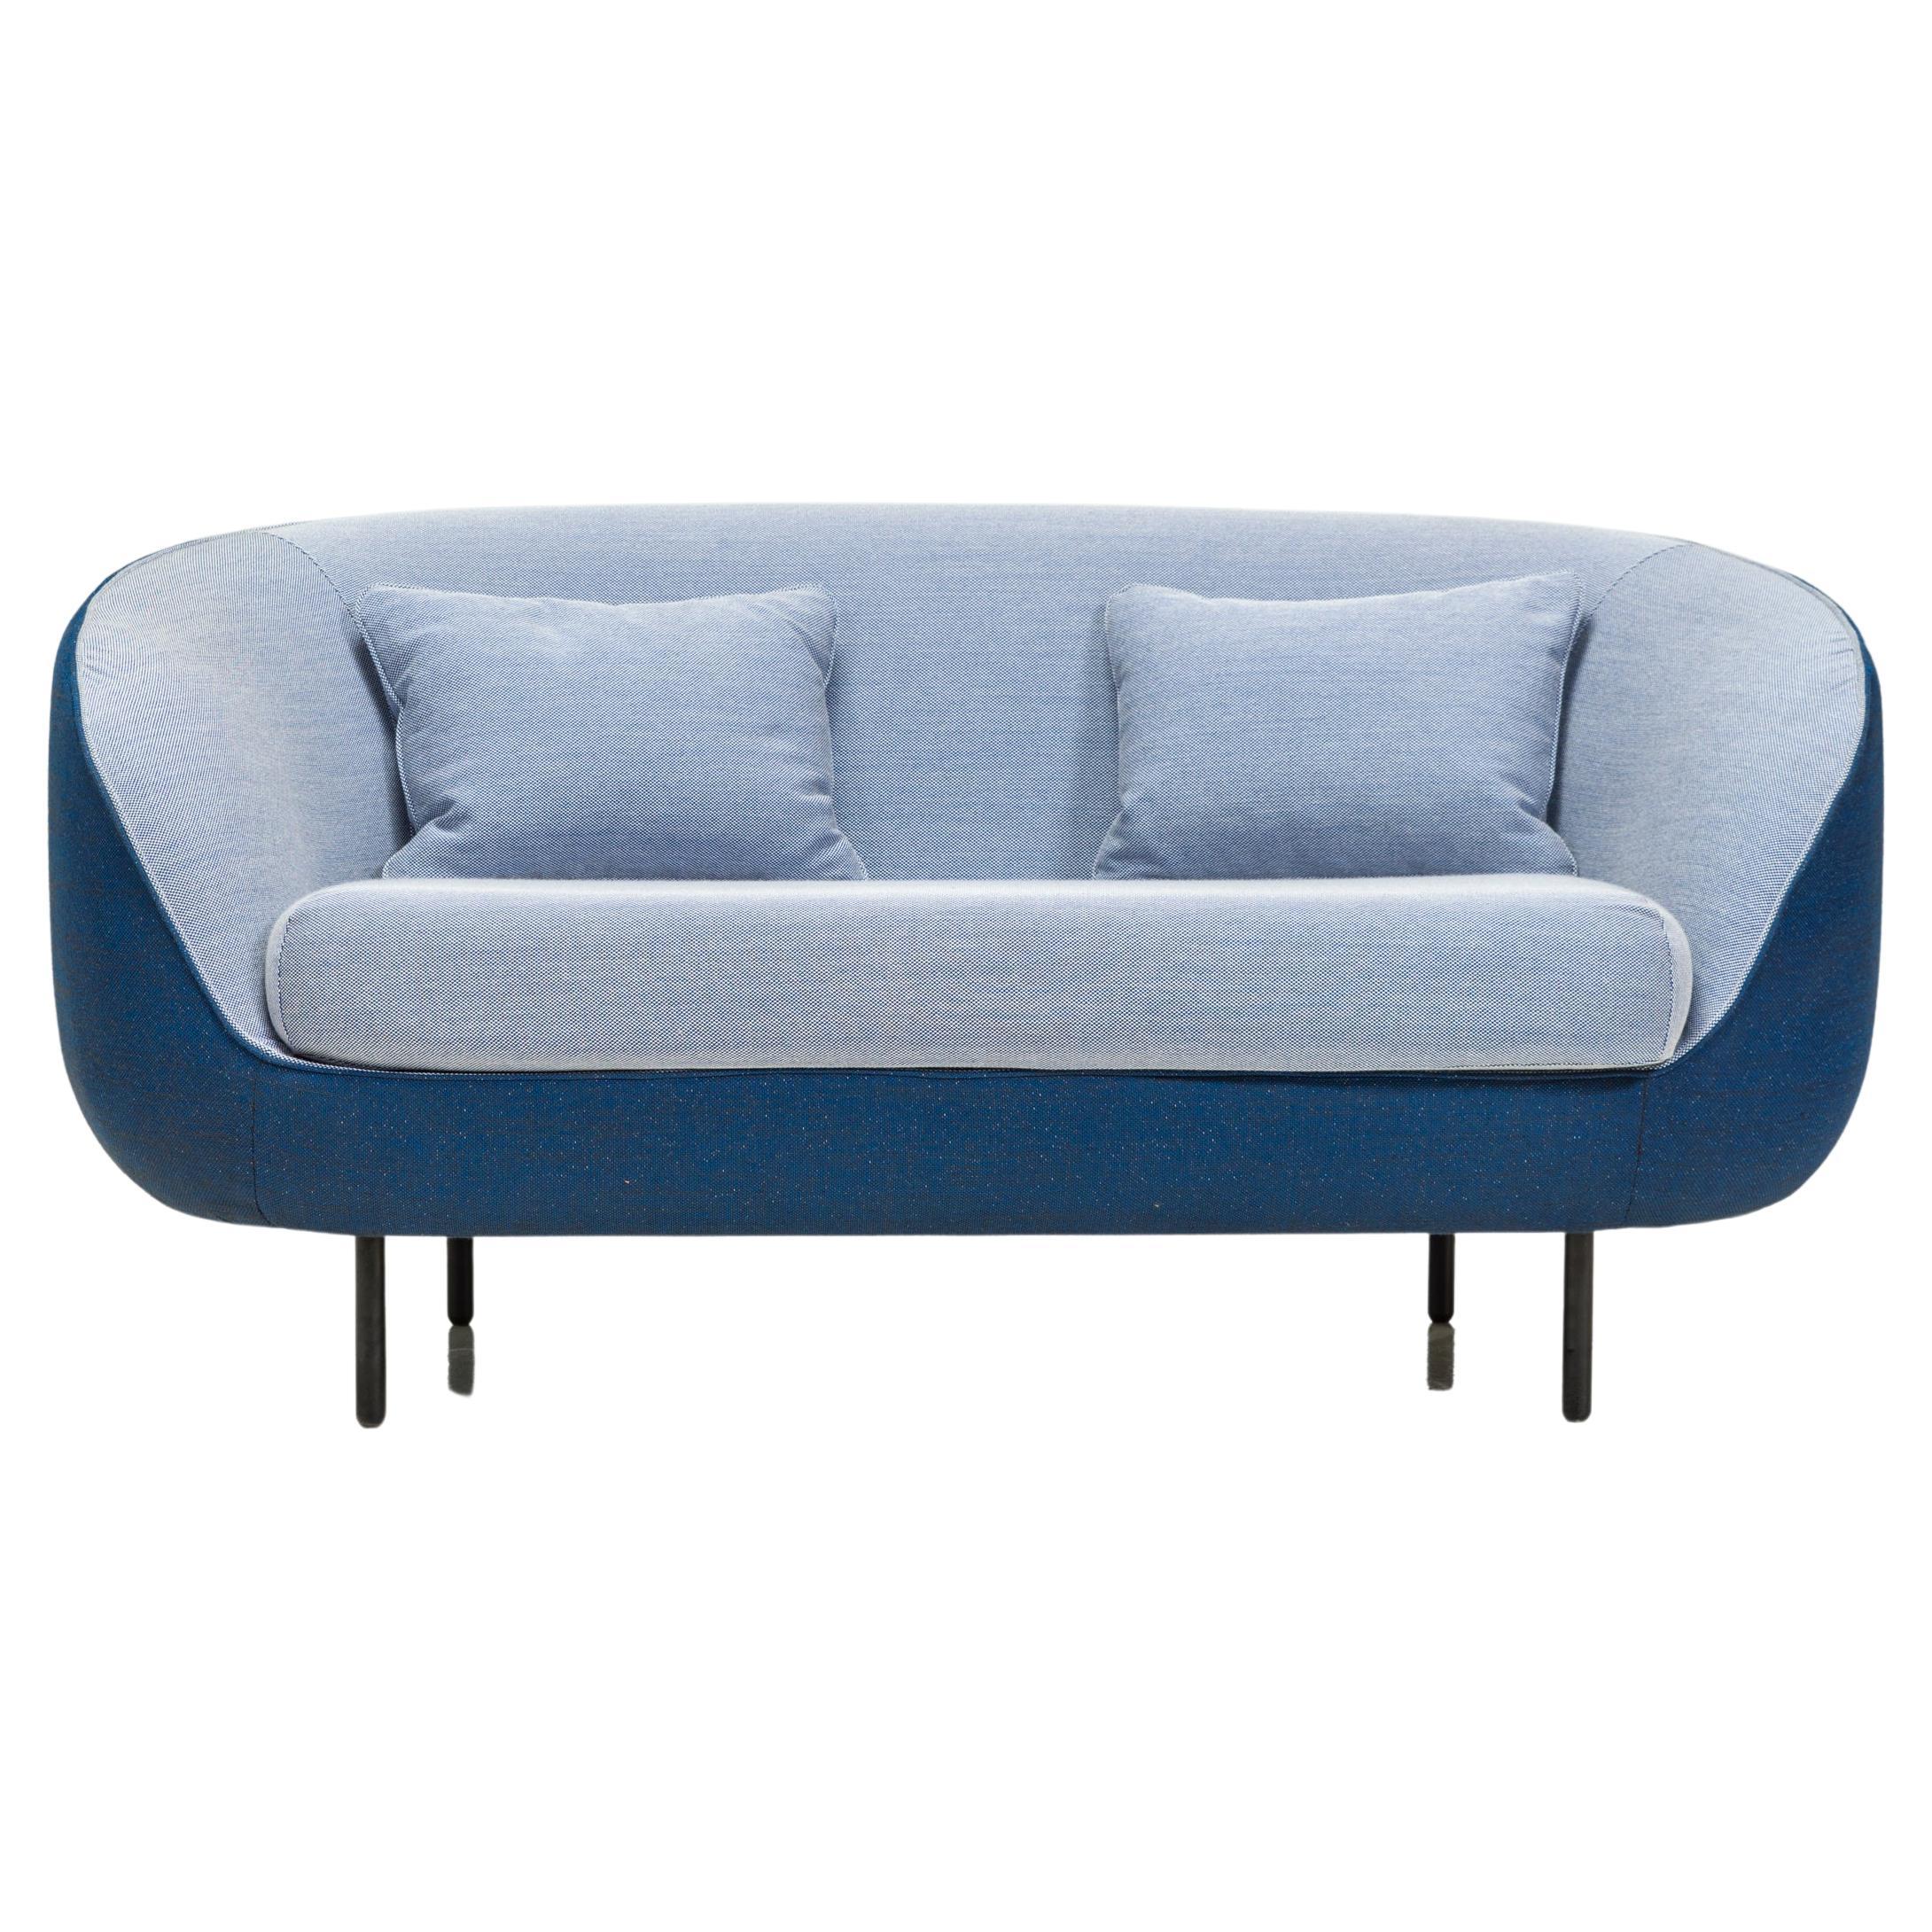 Fredericia by GamFratesi Two Tone Blue Fabric Haiku 2 Seater Sofa, 2018 For Sale